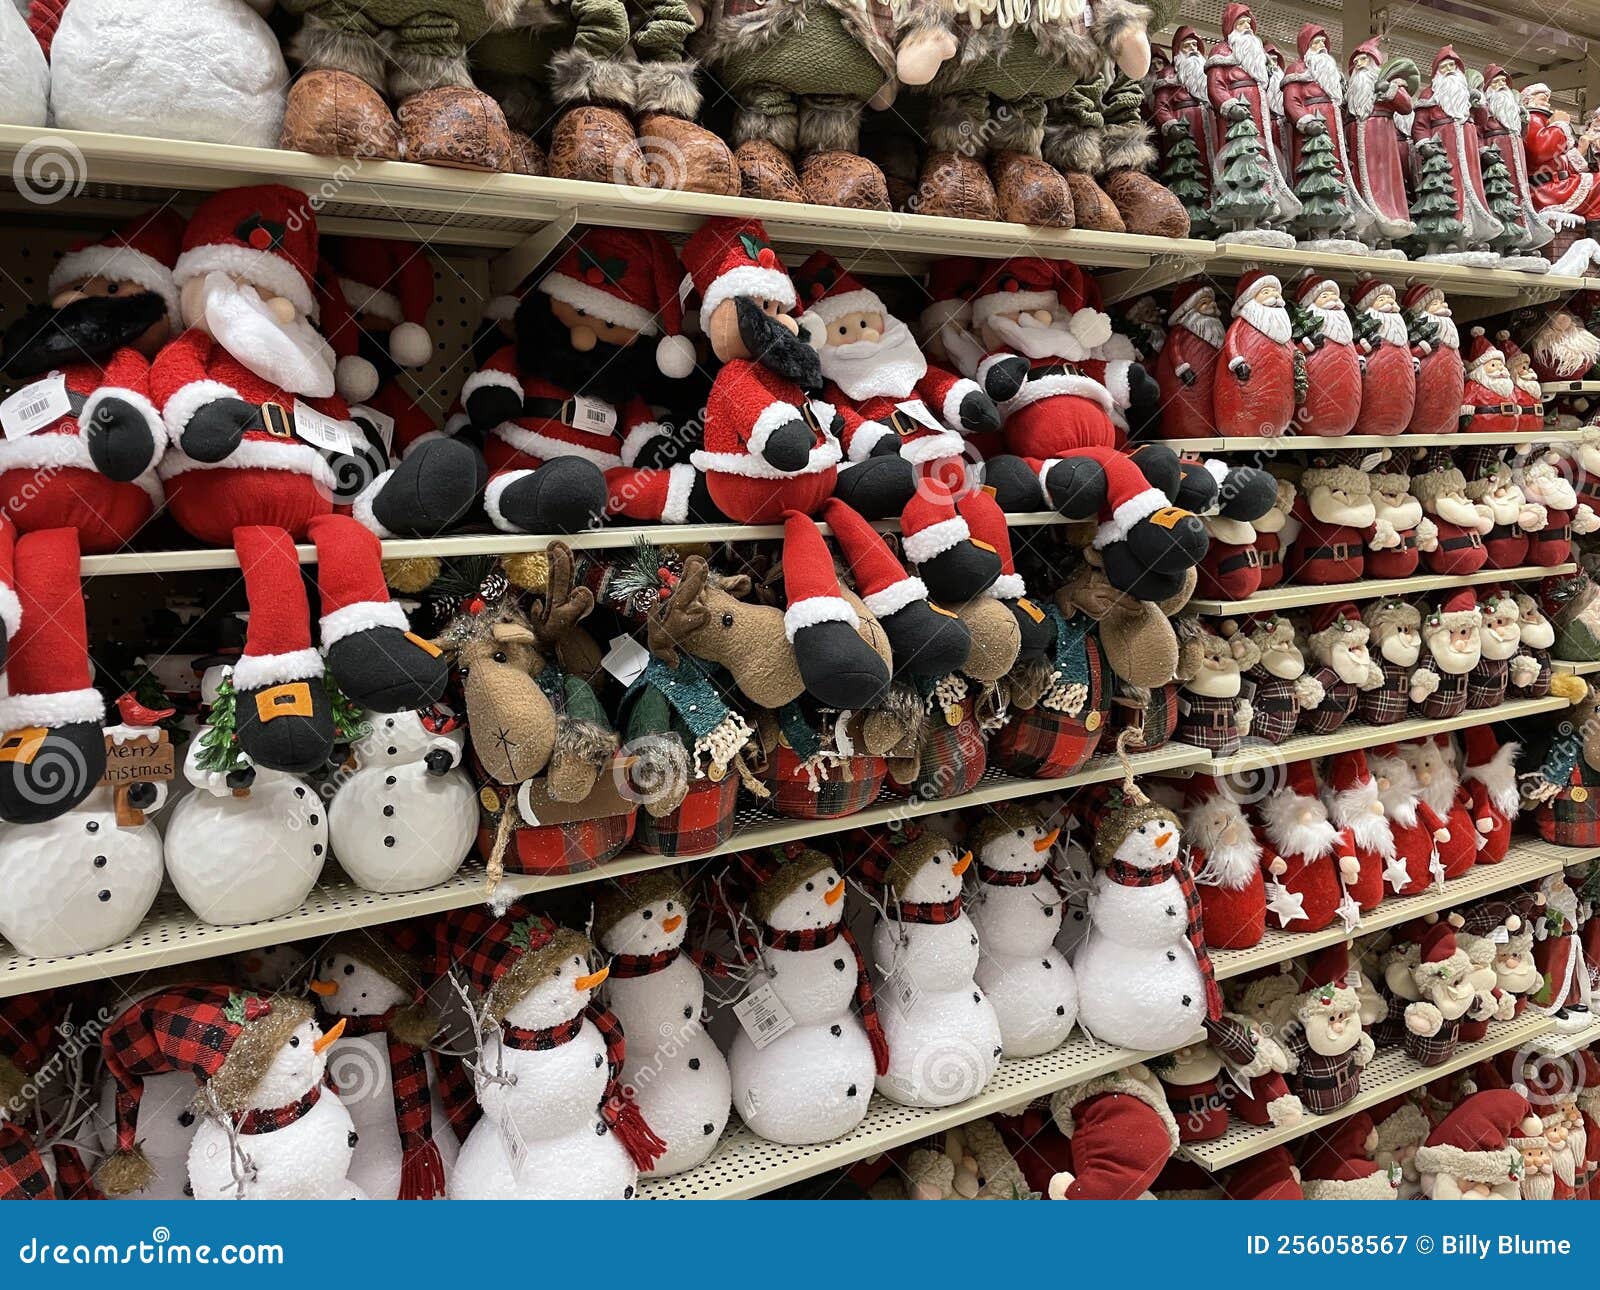 Hobby Lobby Retail Store Interior Christmas Fluffy Santa Clause